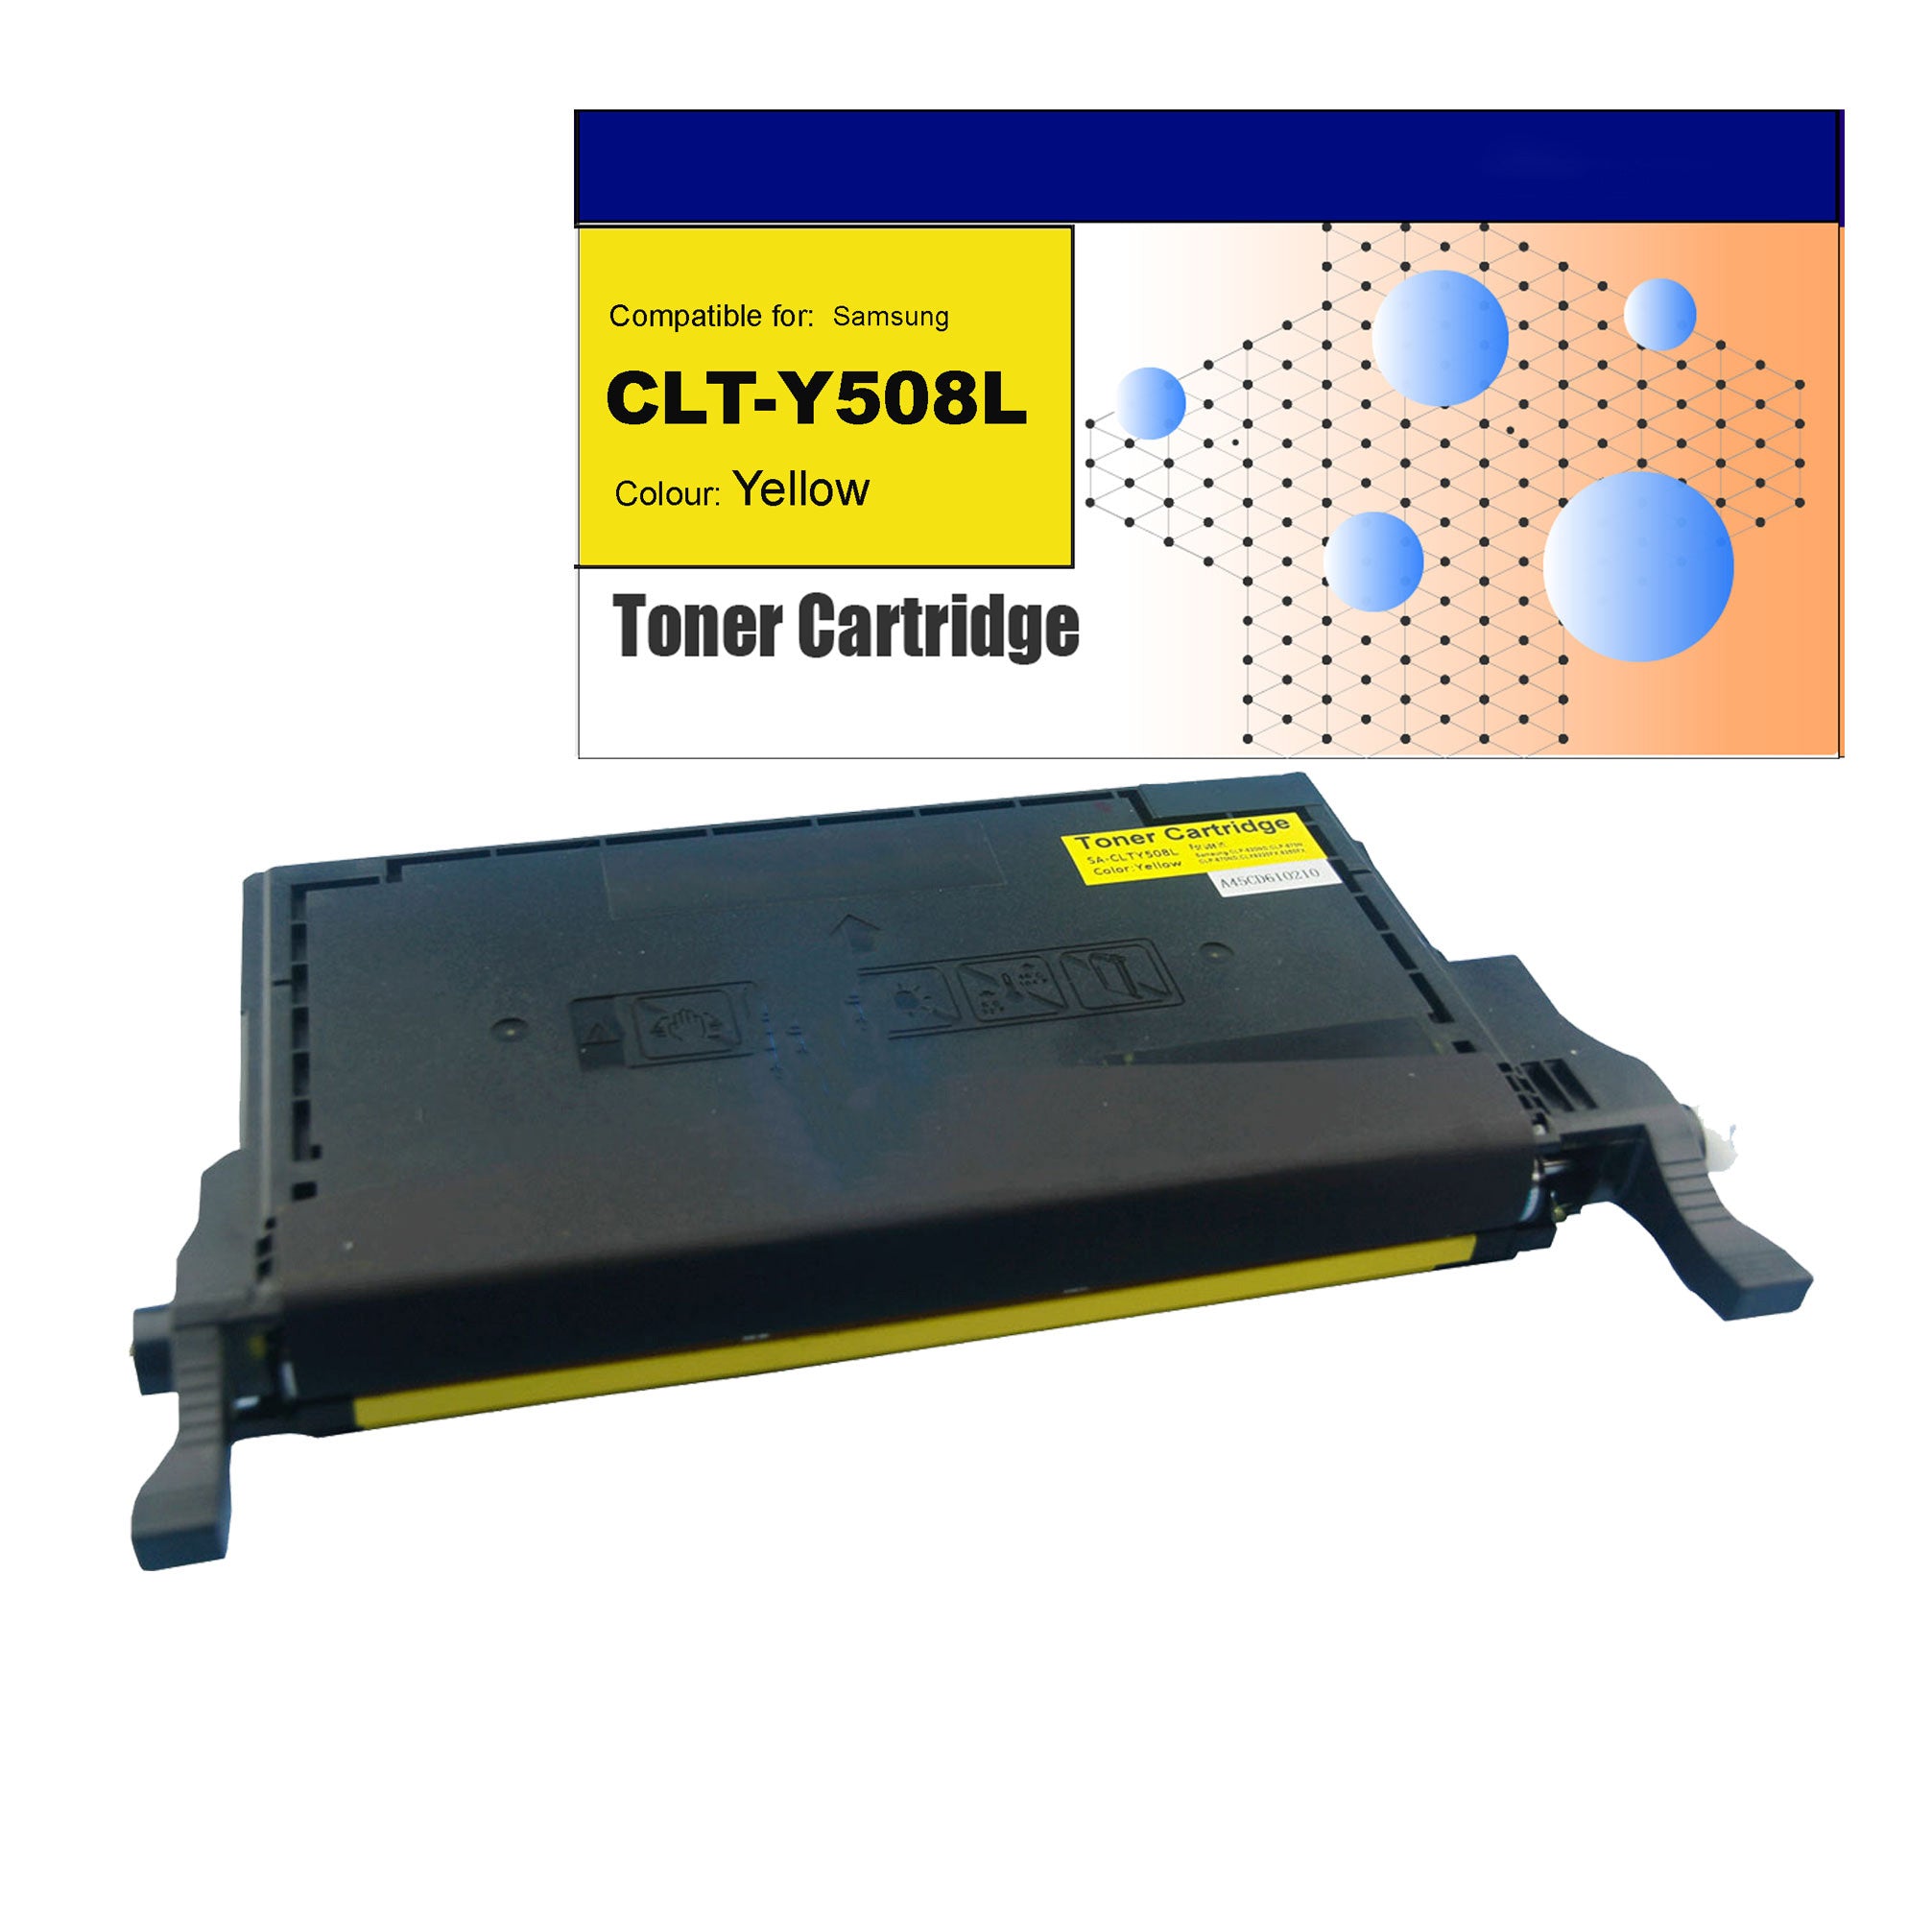 Compatible Toner for Samsung CLT-Y508L Yellow Toner Cartridges